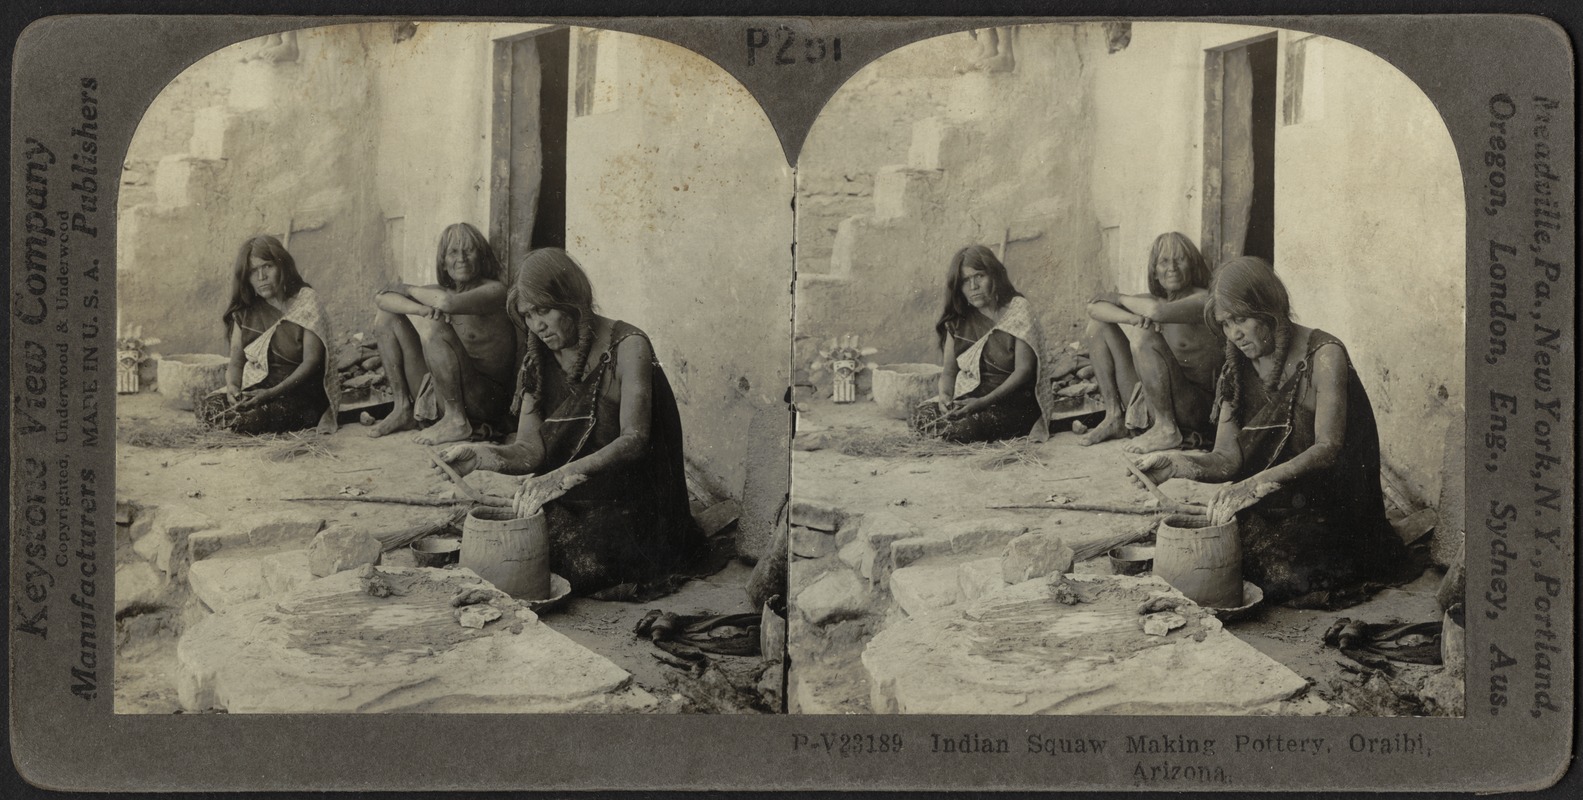 Indian squaw making pottery, Oraibi, Arizona